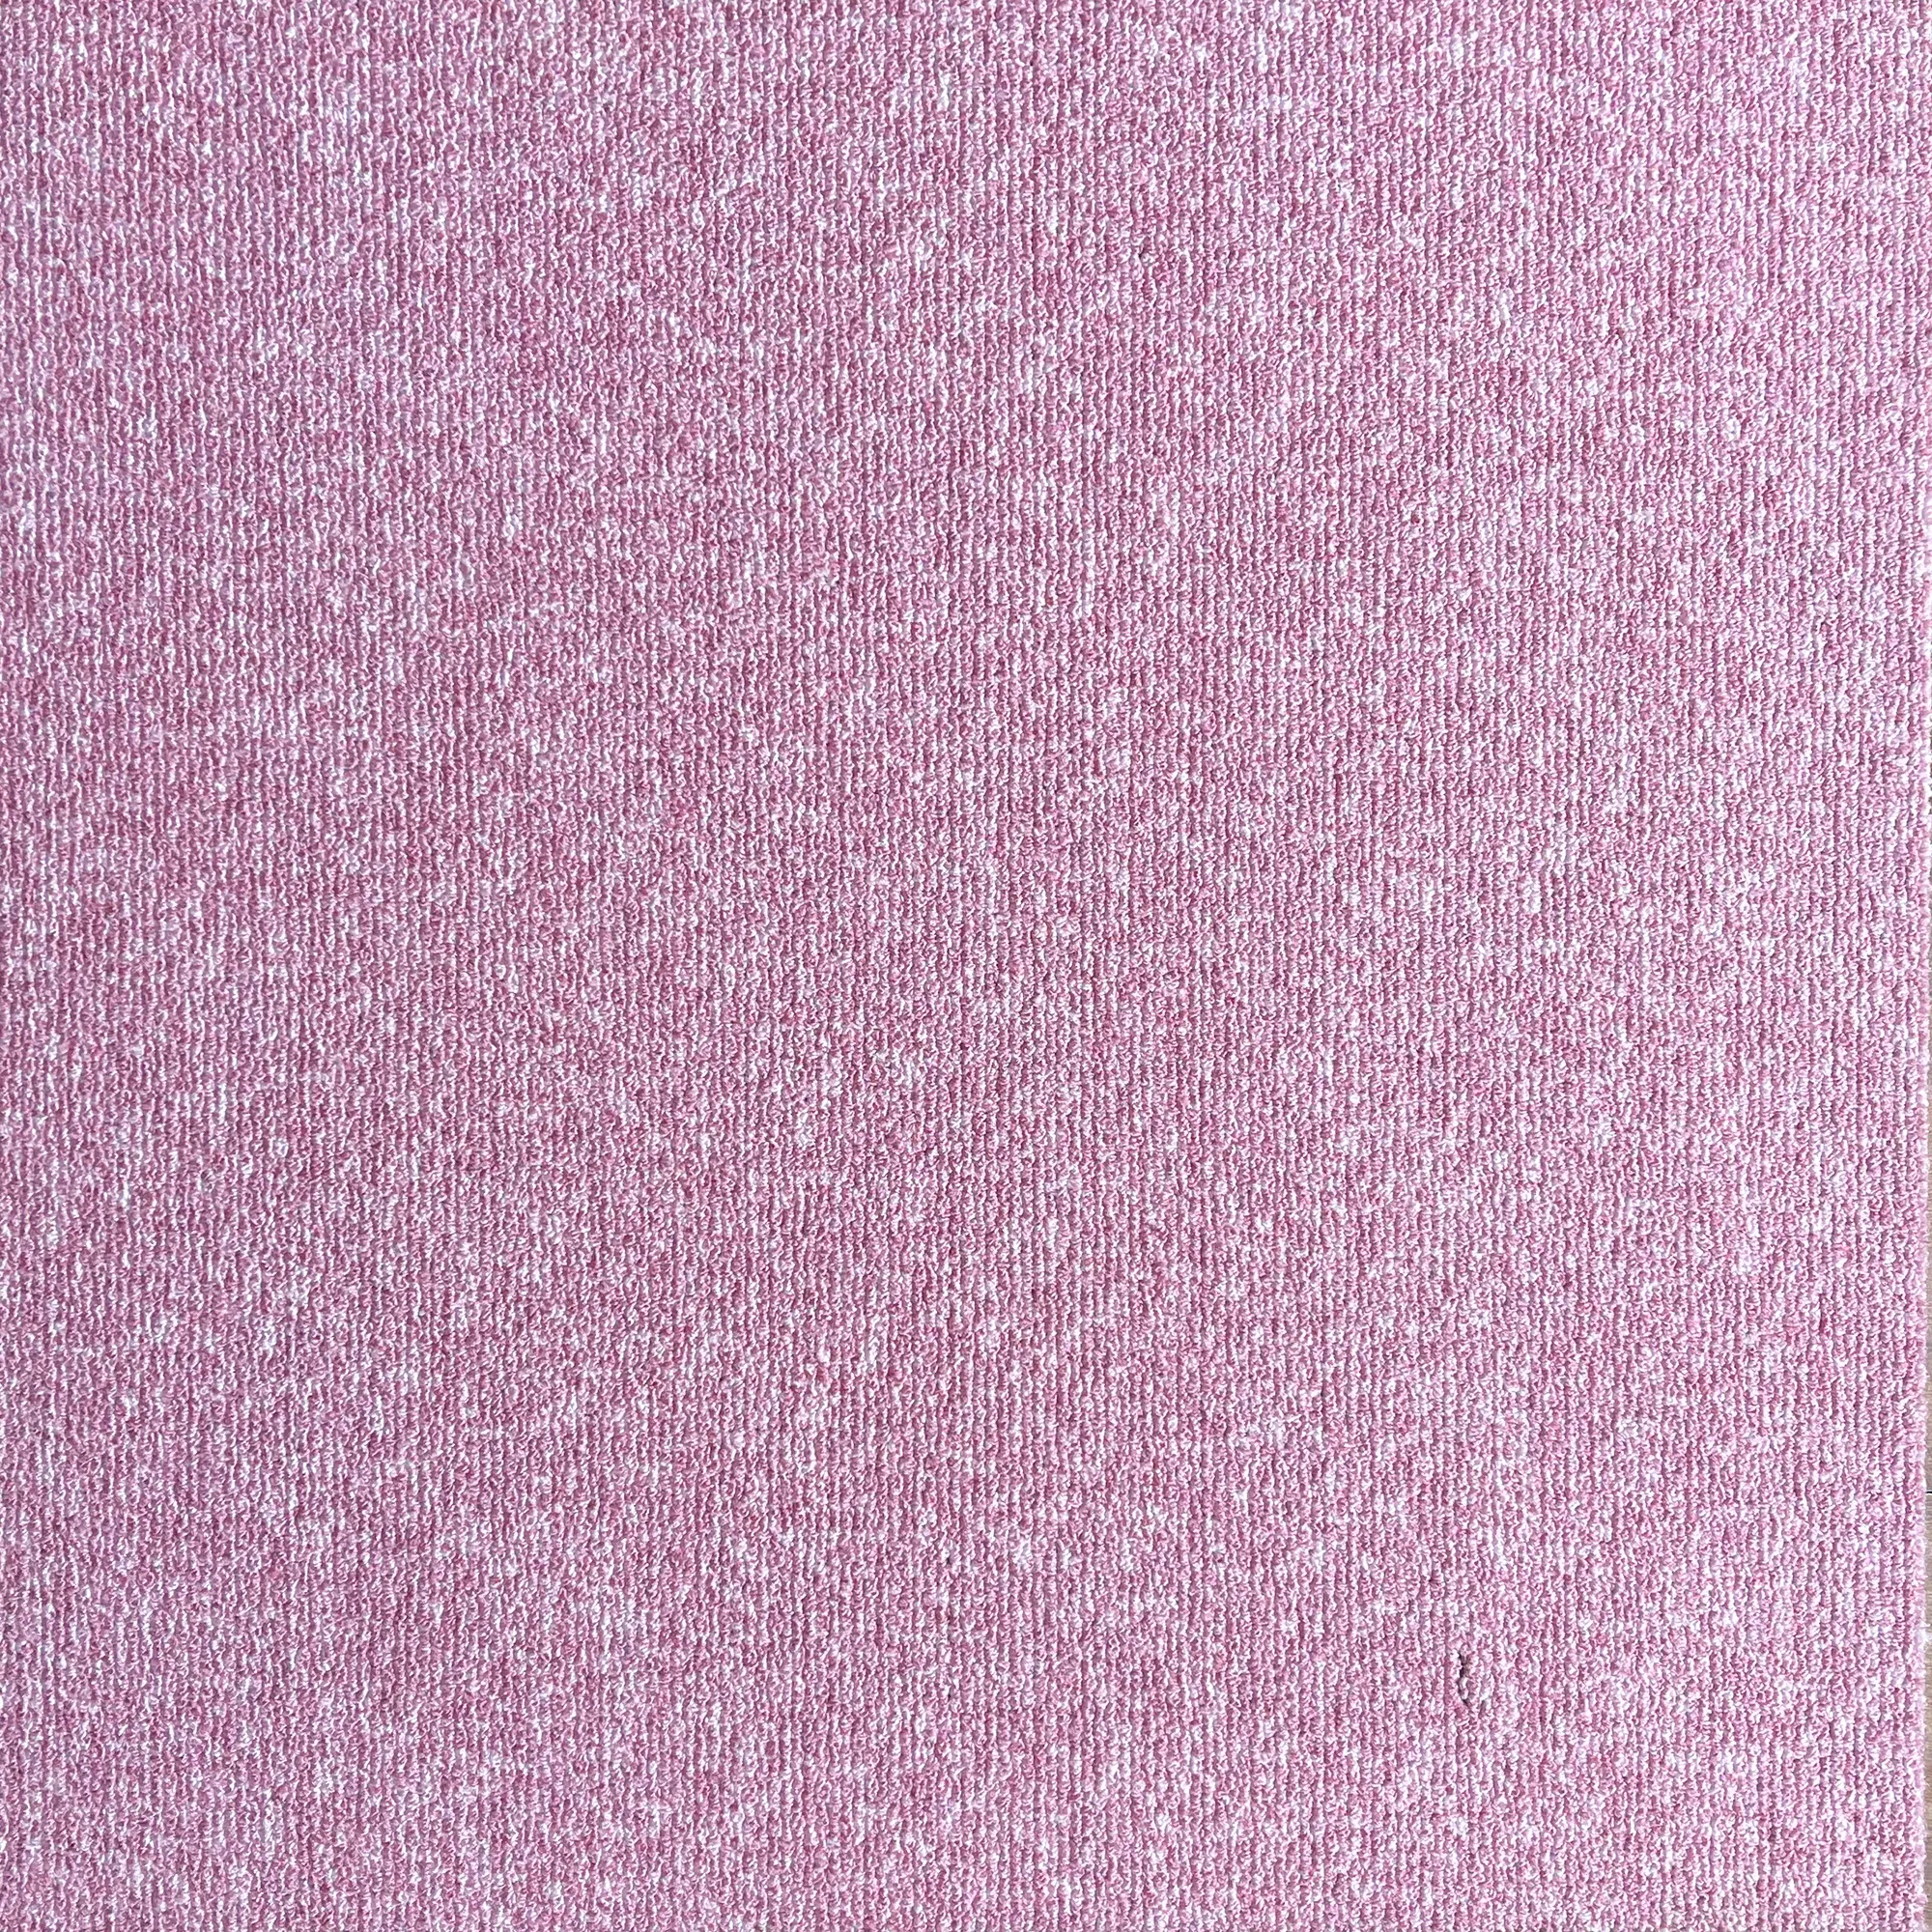 pink sample